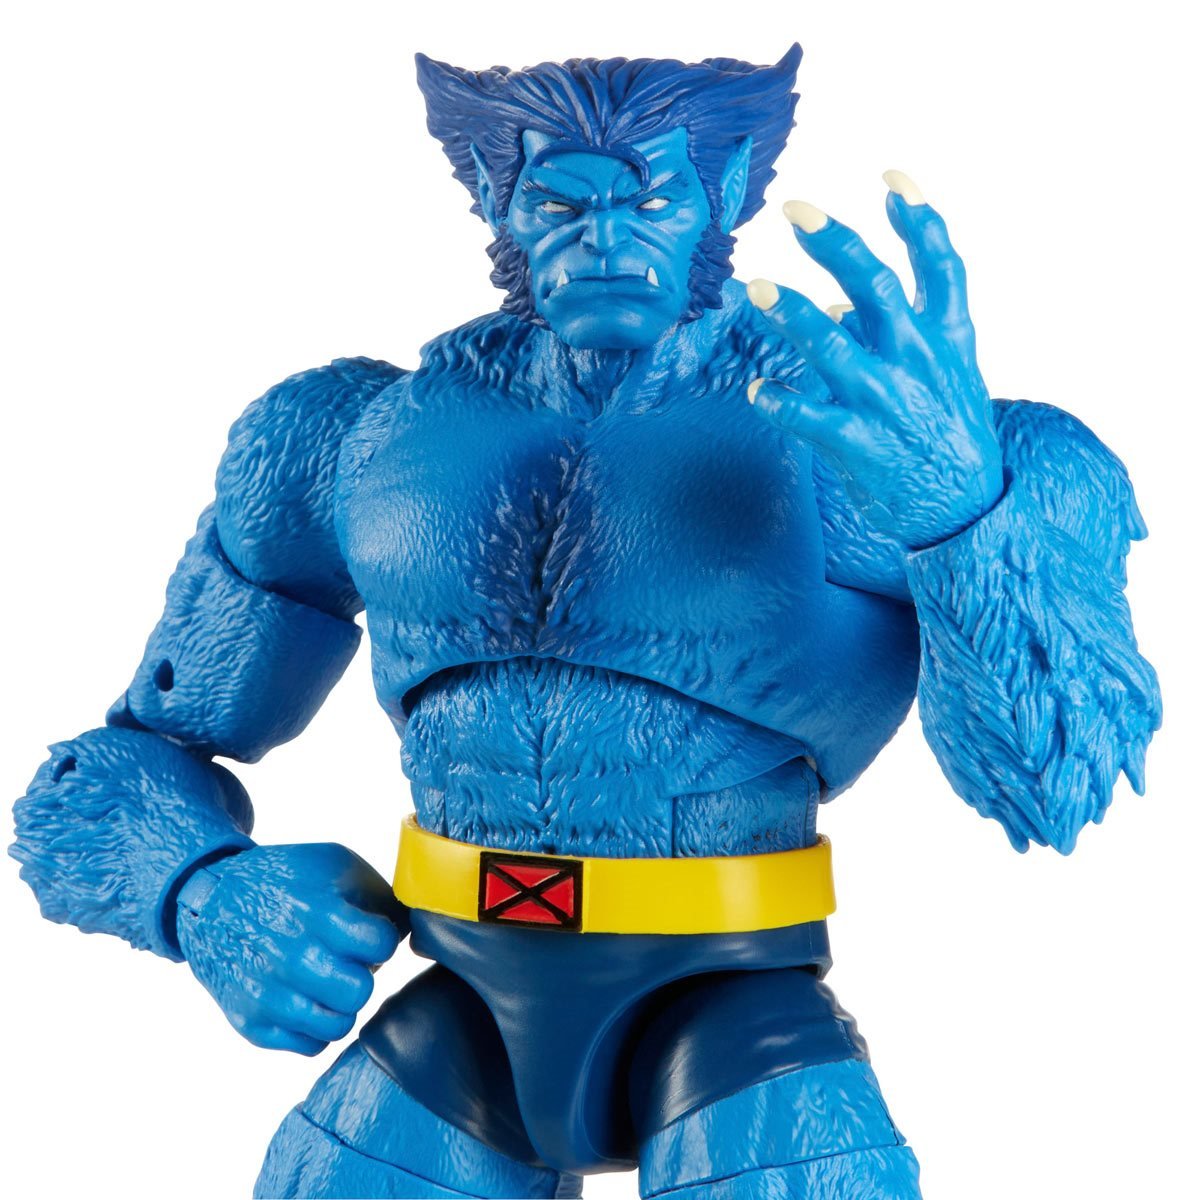 Marvel Diamond Select Beast Action Figure Xmen X-men for sale online 